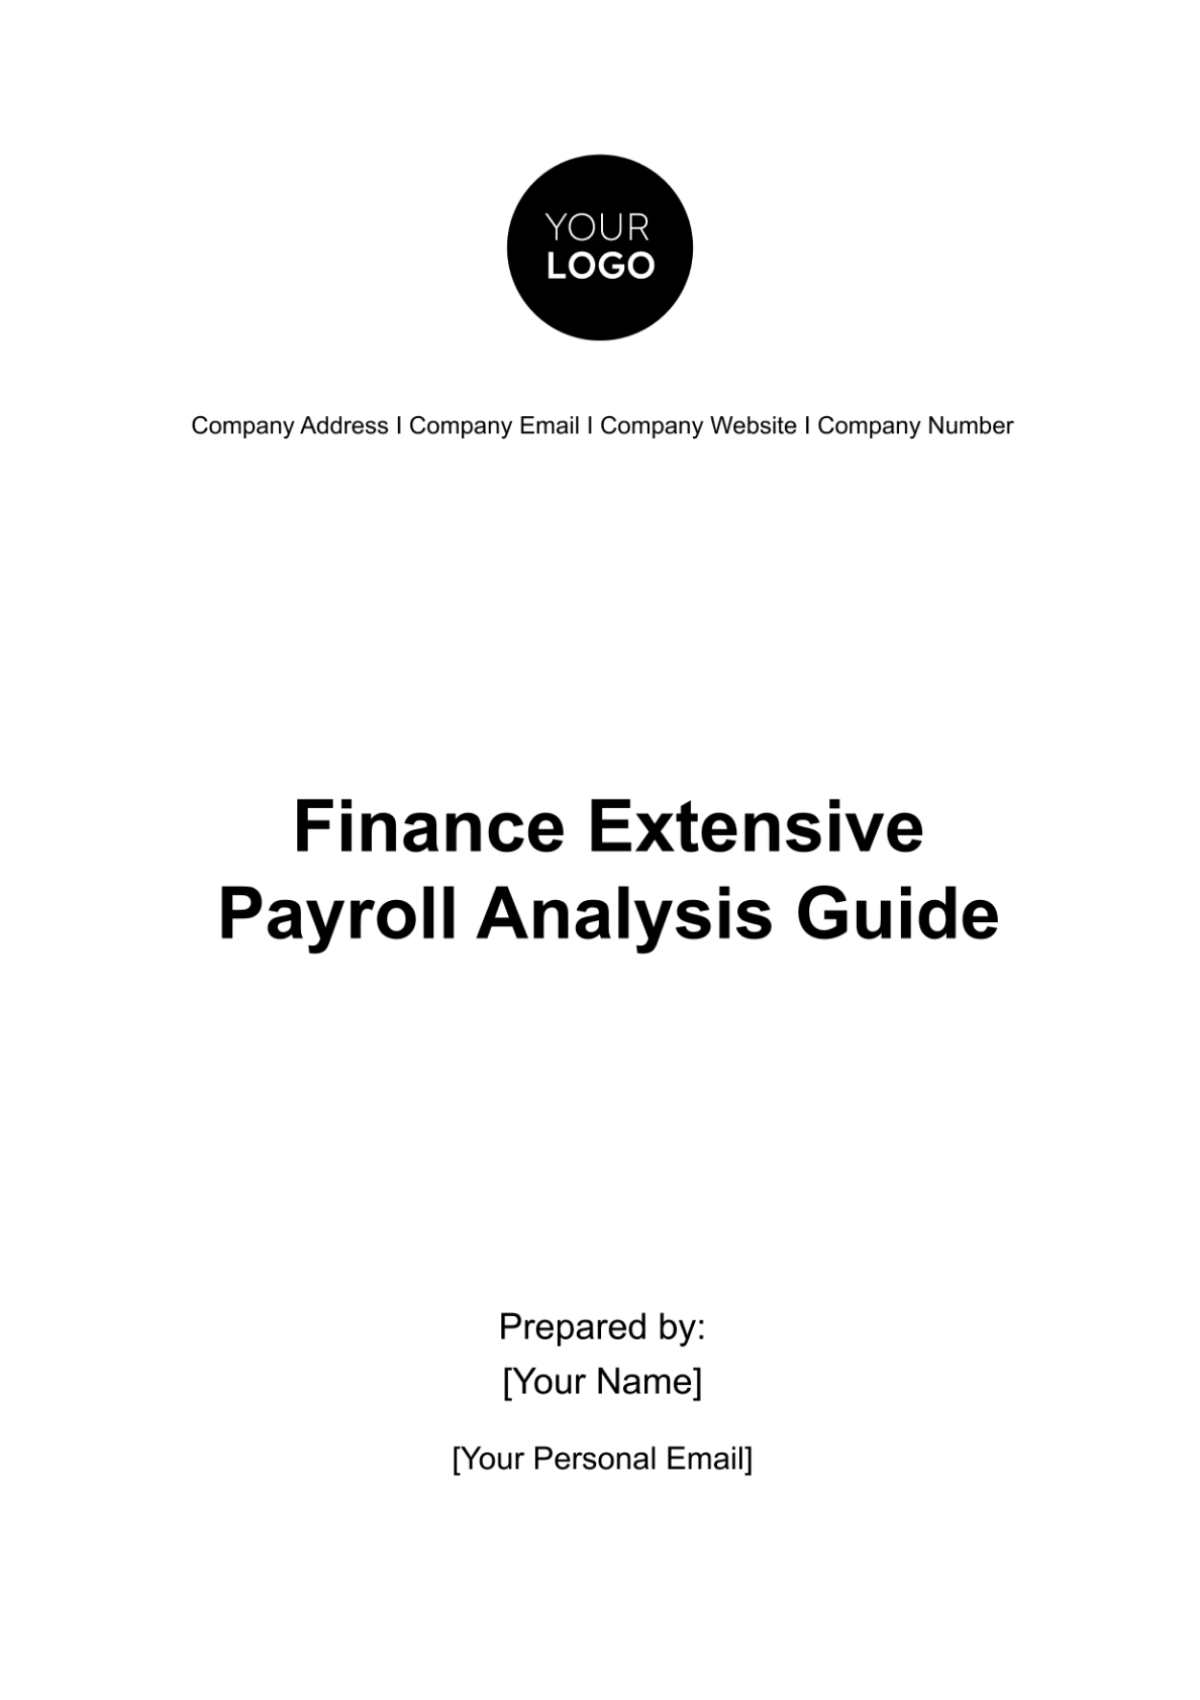 Finance Extensive Payroll Analysis Guide Template